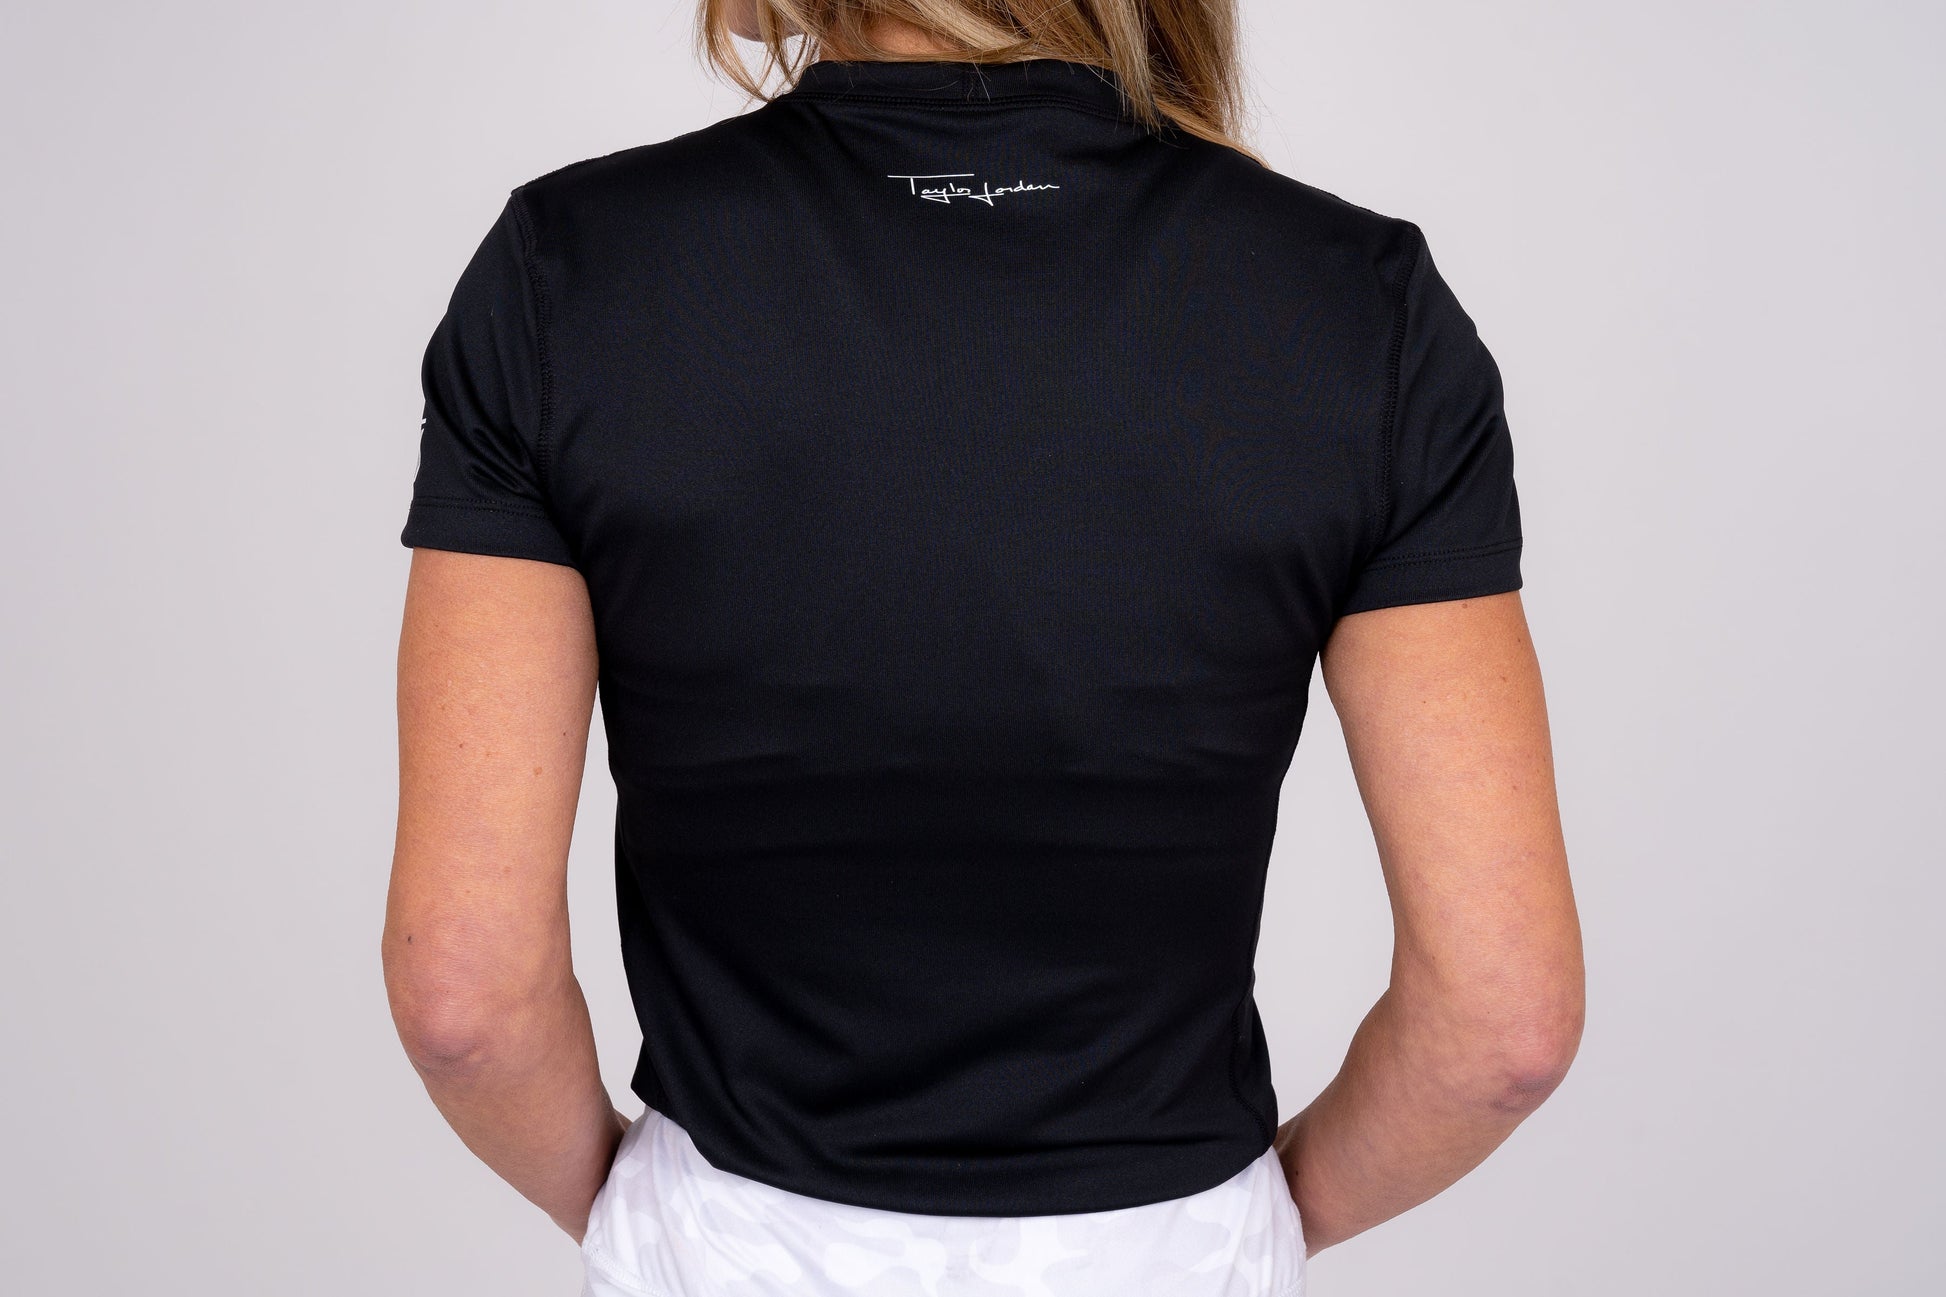 Women's Collarless Athletic Top-Black Activewear Taylor Jordan Apparel 